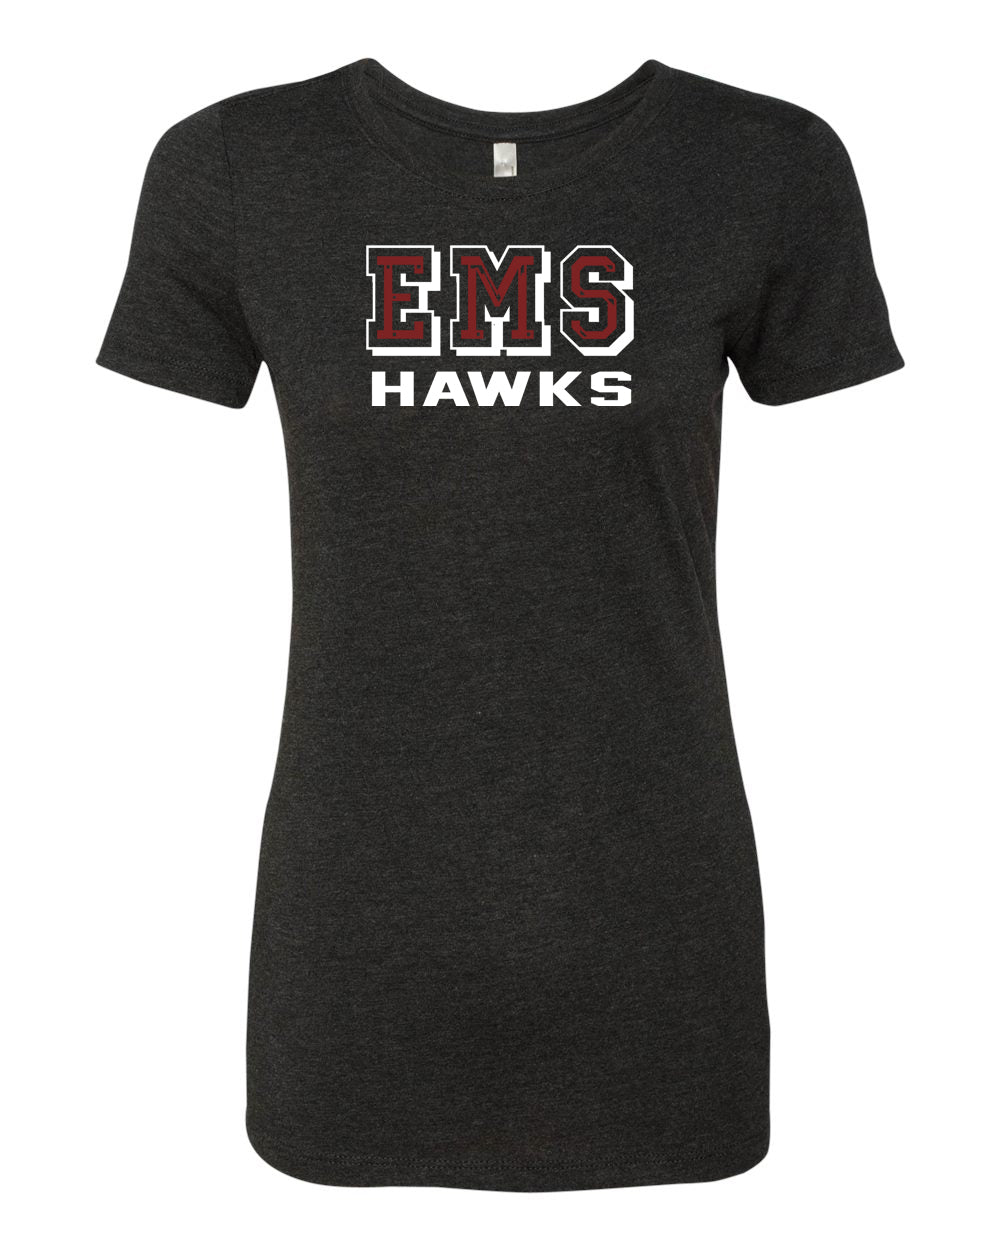 EMS HAWKS on black Fitted Tri-Blend Short Sleeve